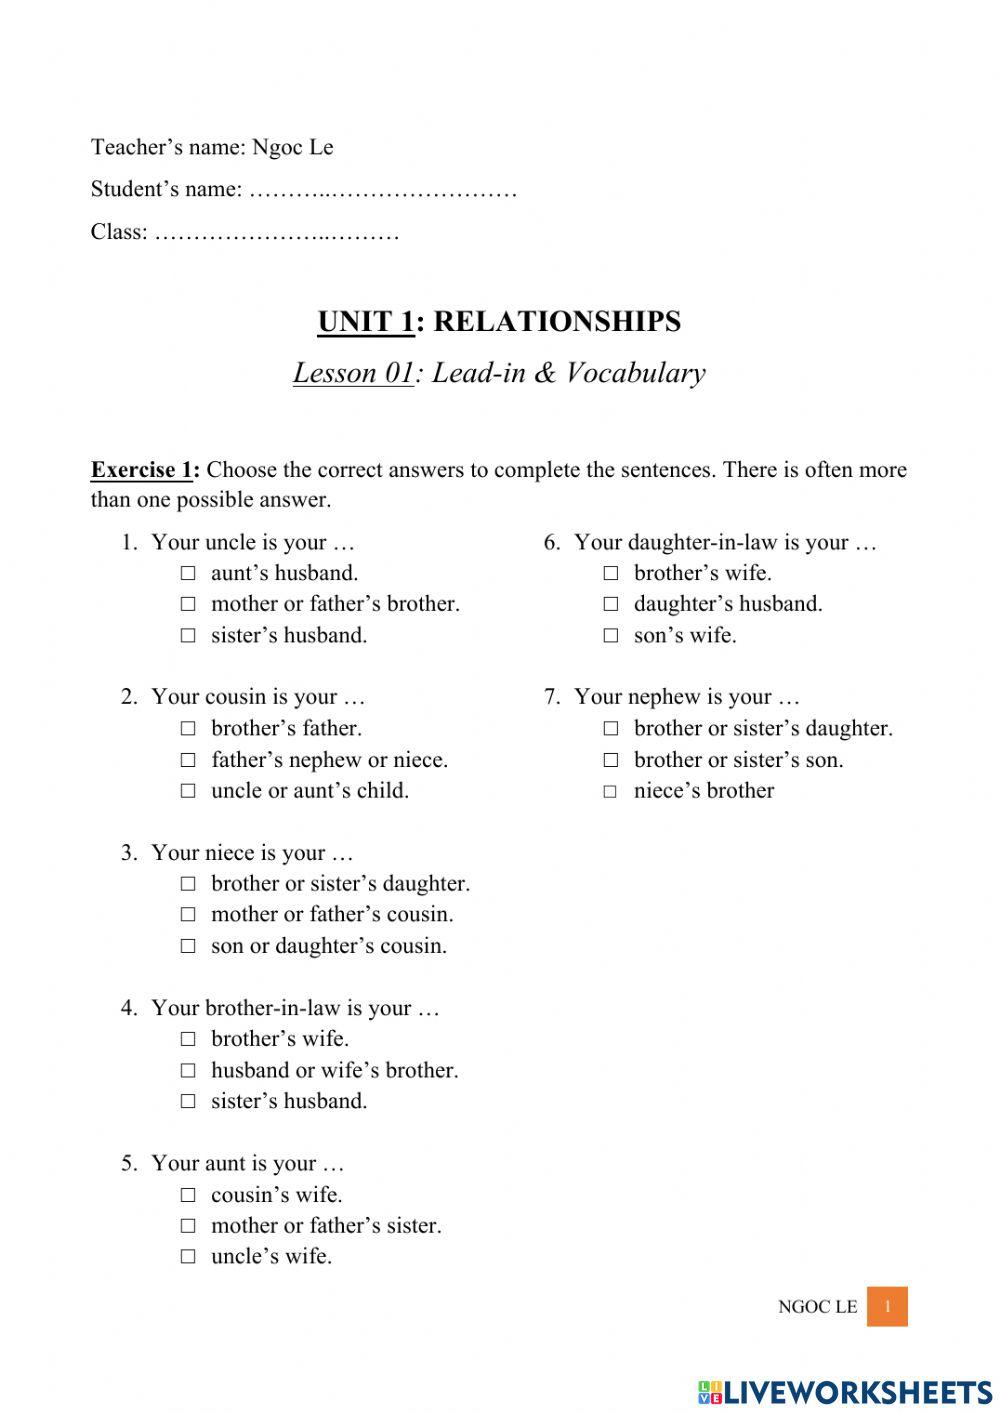 Relationship - Lesson 1